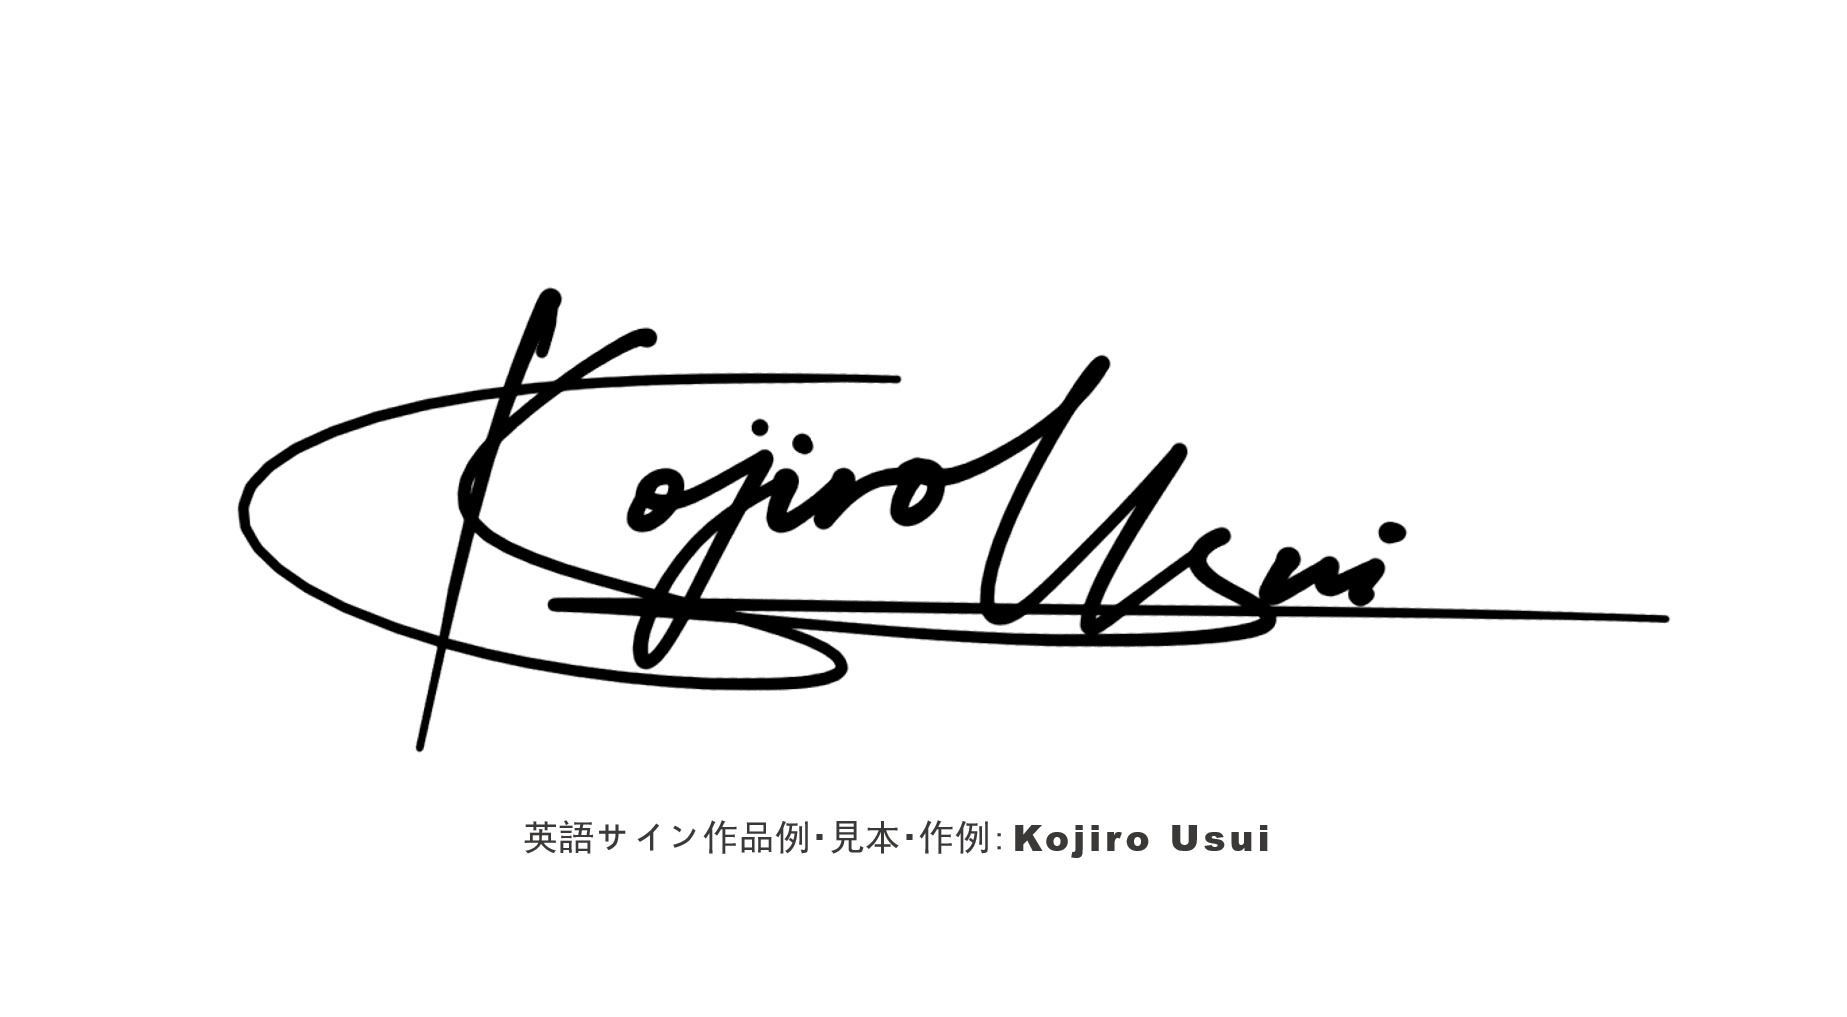 漂亮英文签名设计丨signature design丨signature logo